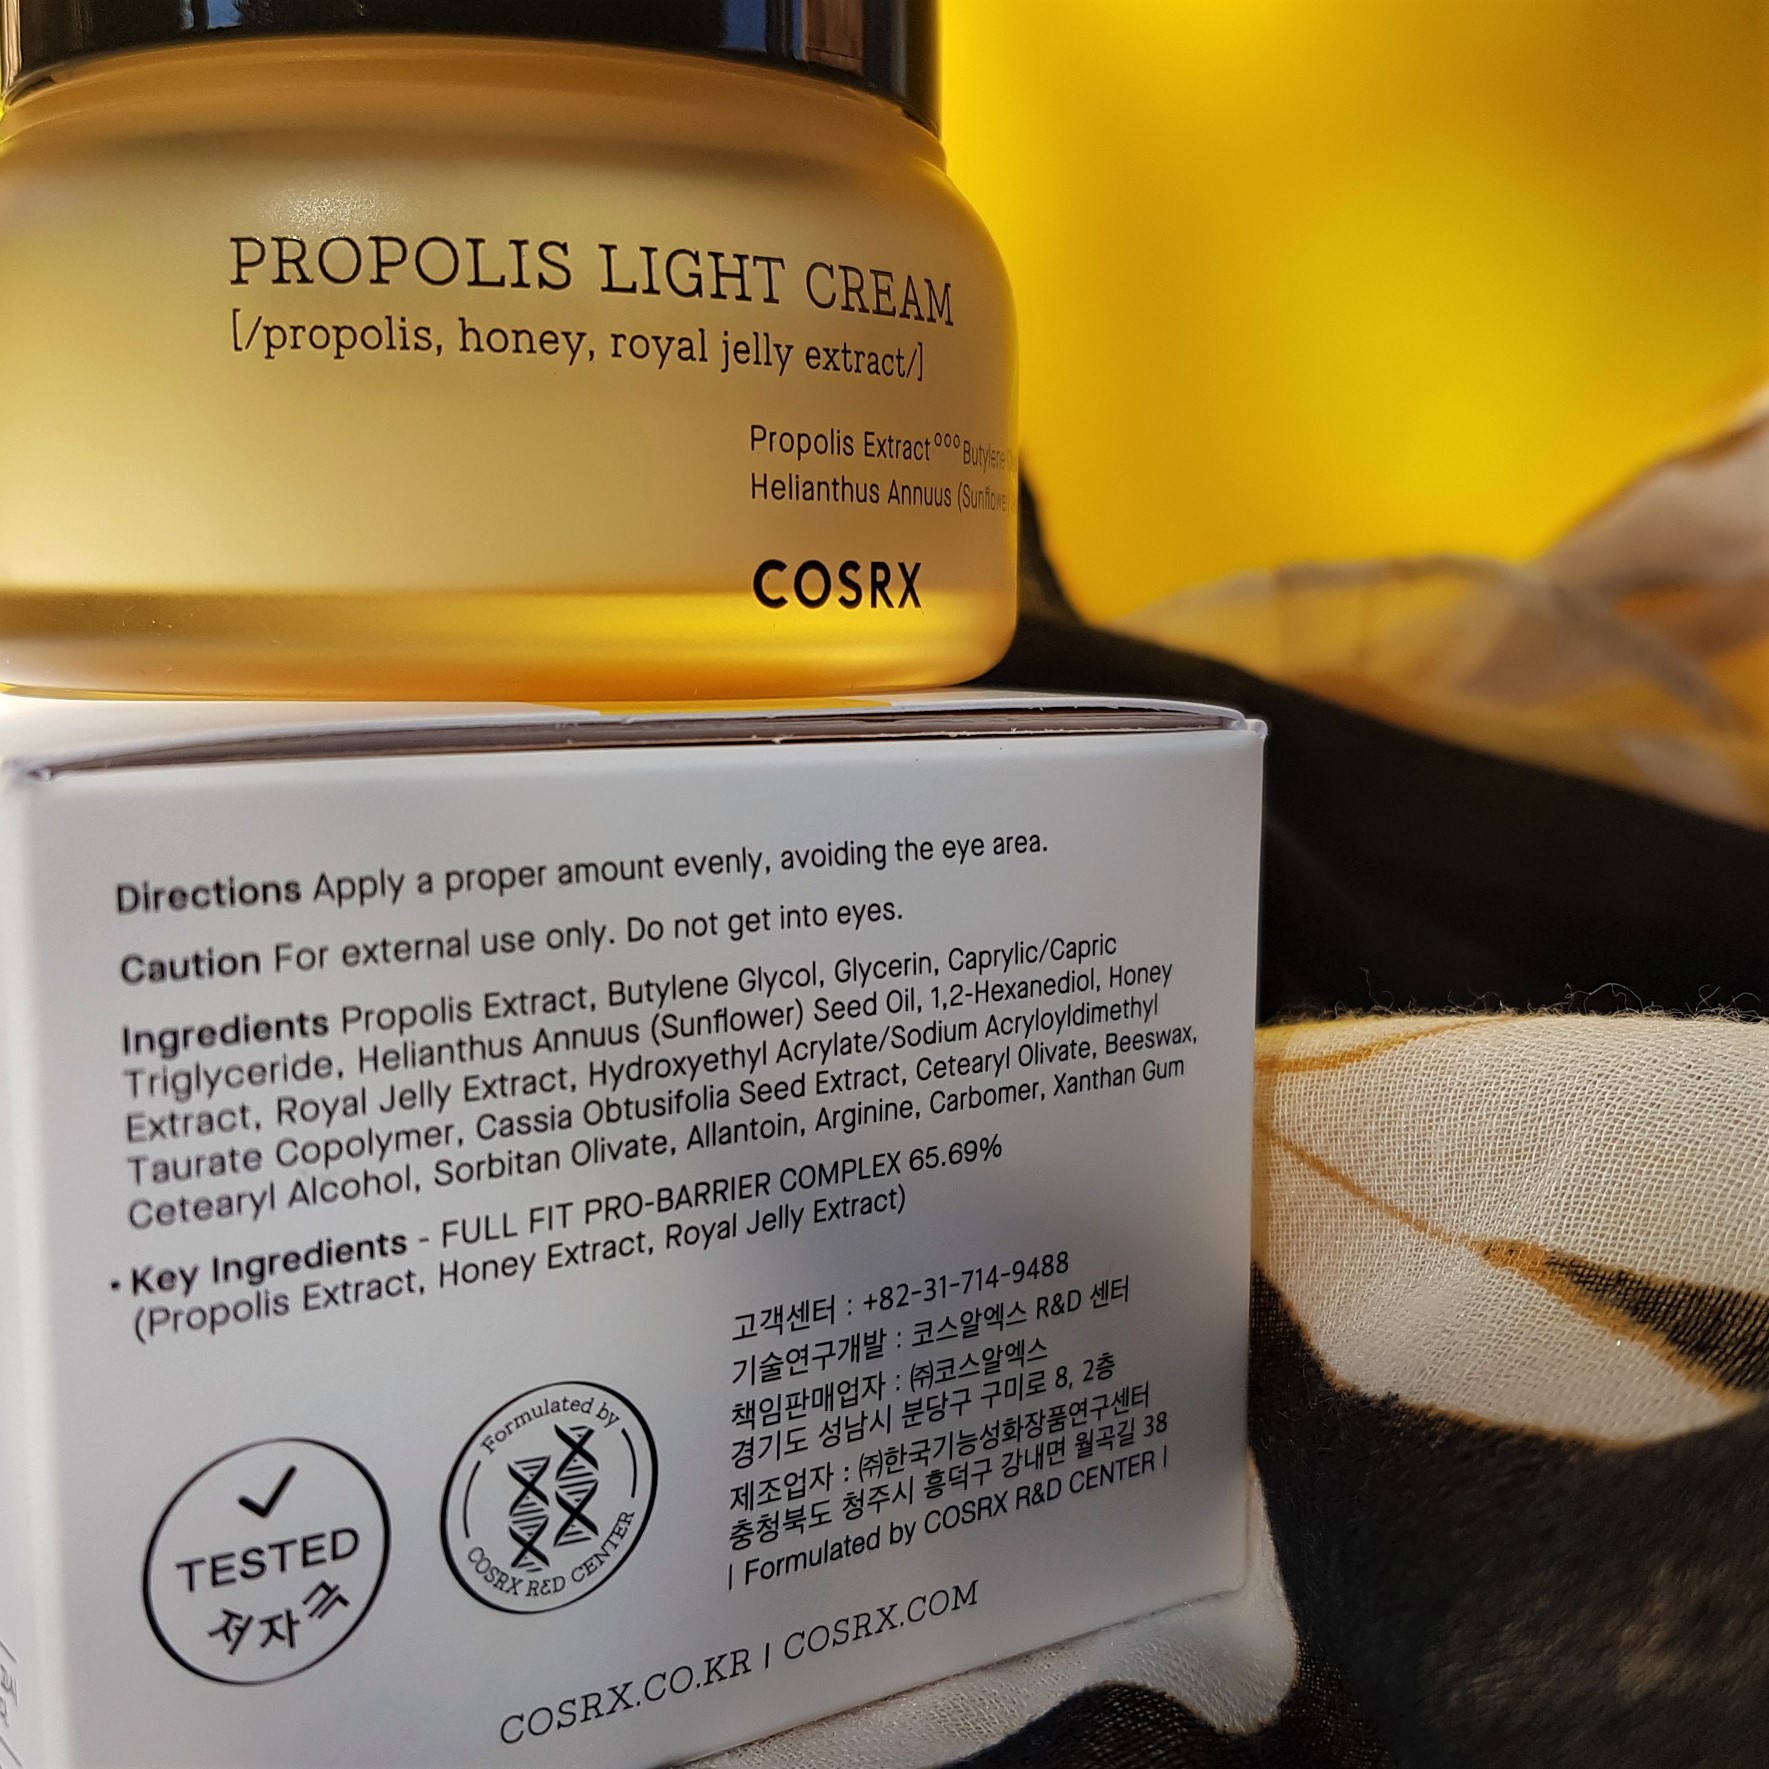 Cosrx Propolis Light Cream Ingredients